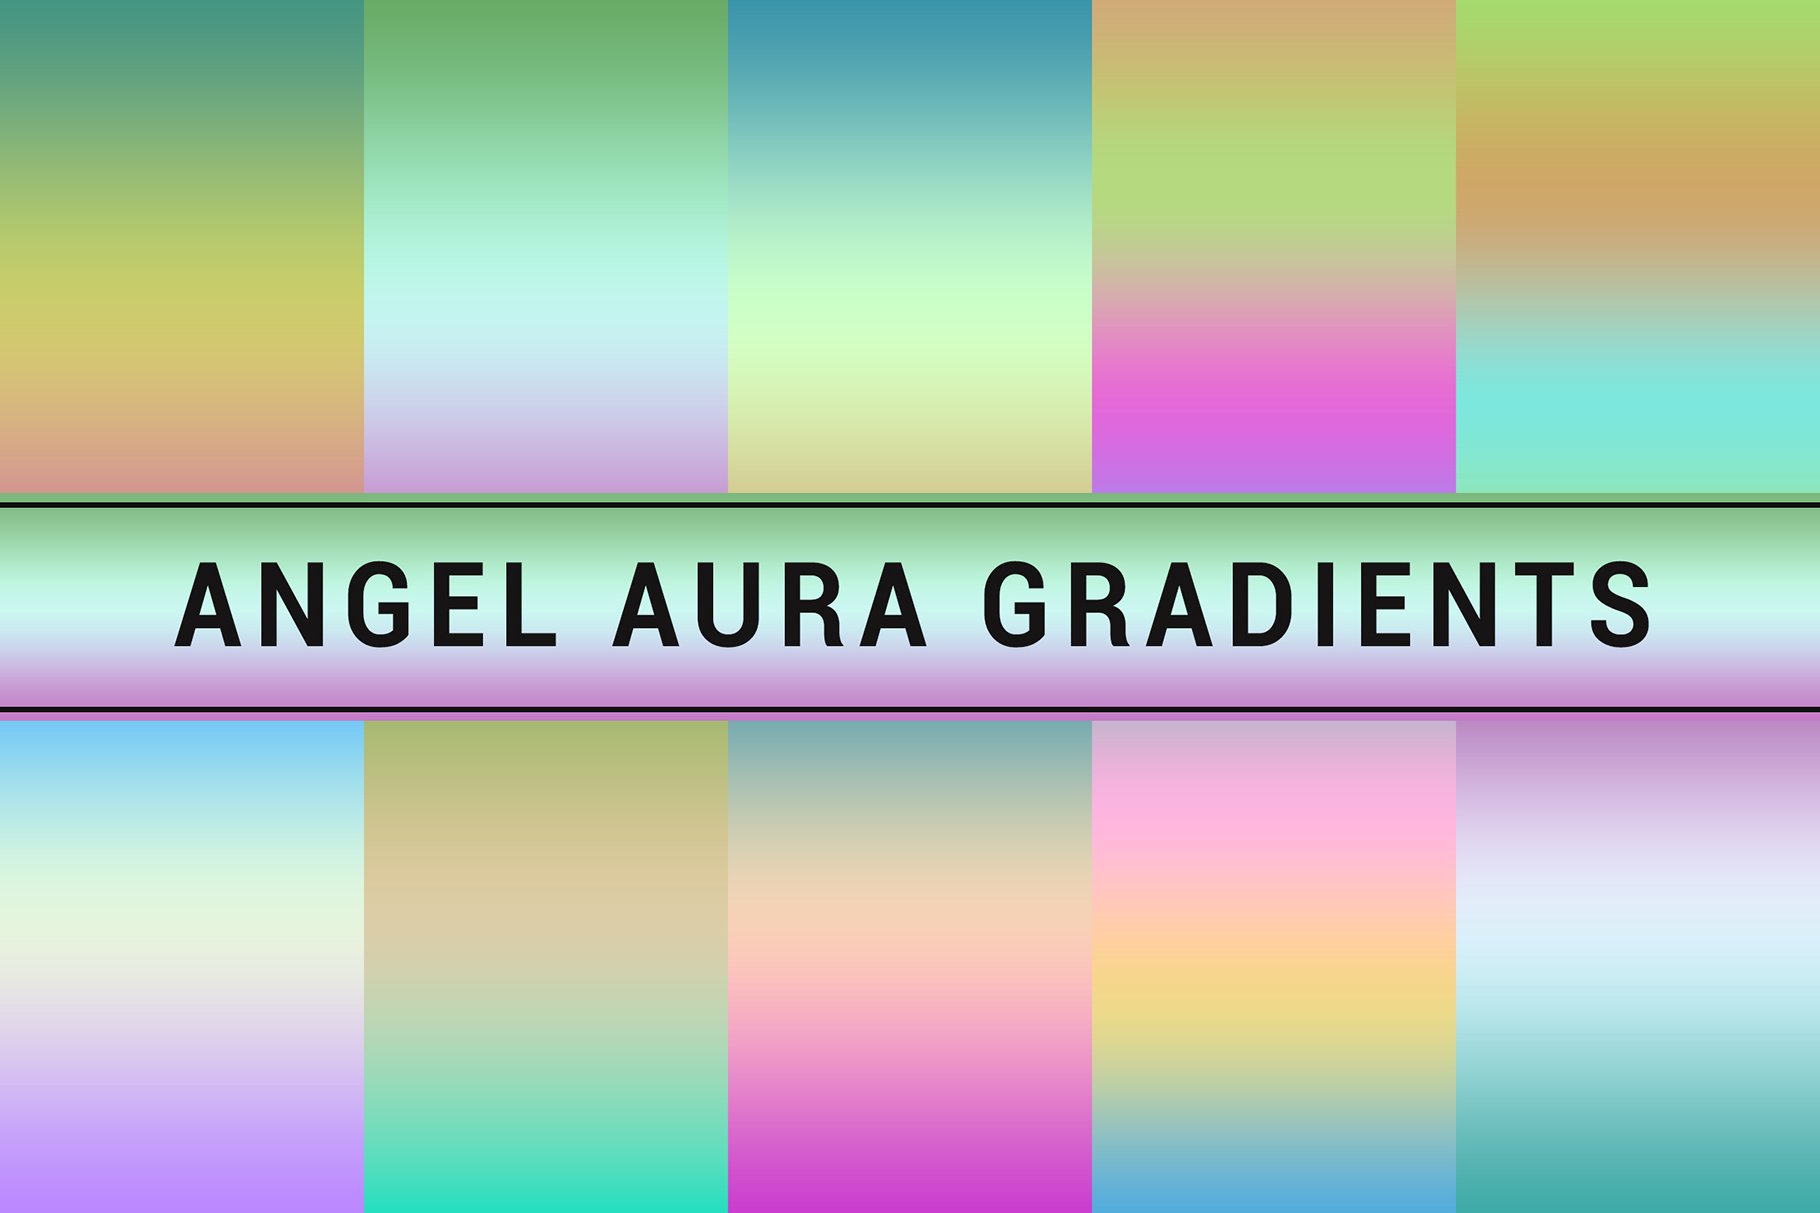 Angel Aura Gradients cover image.